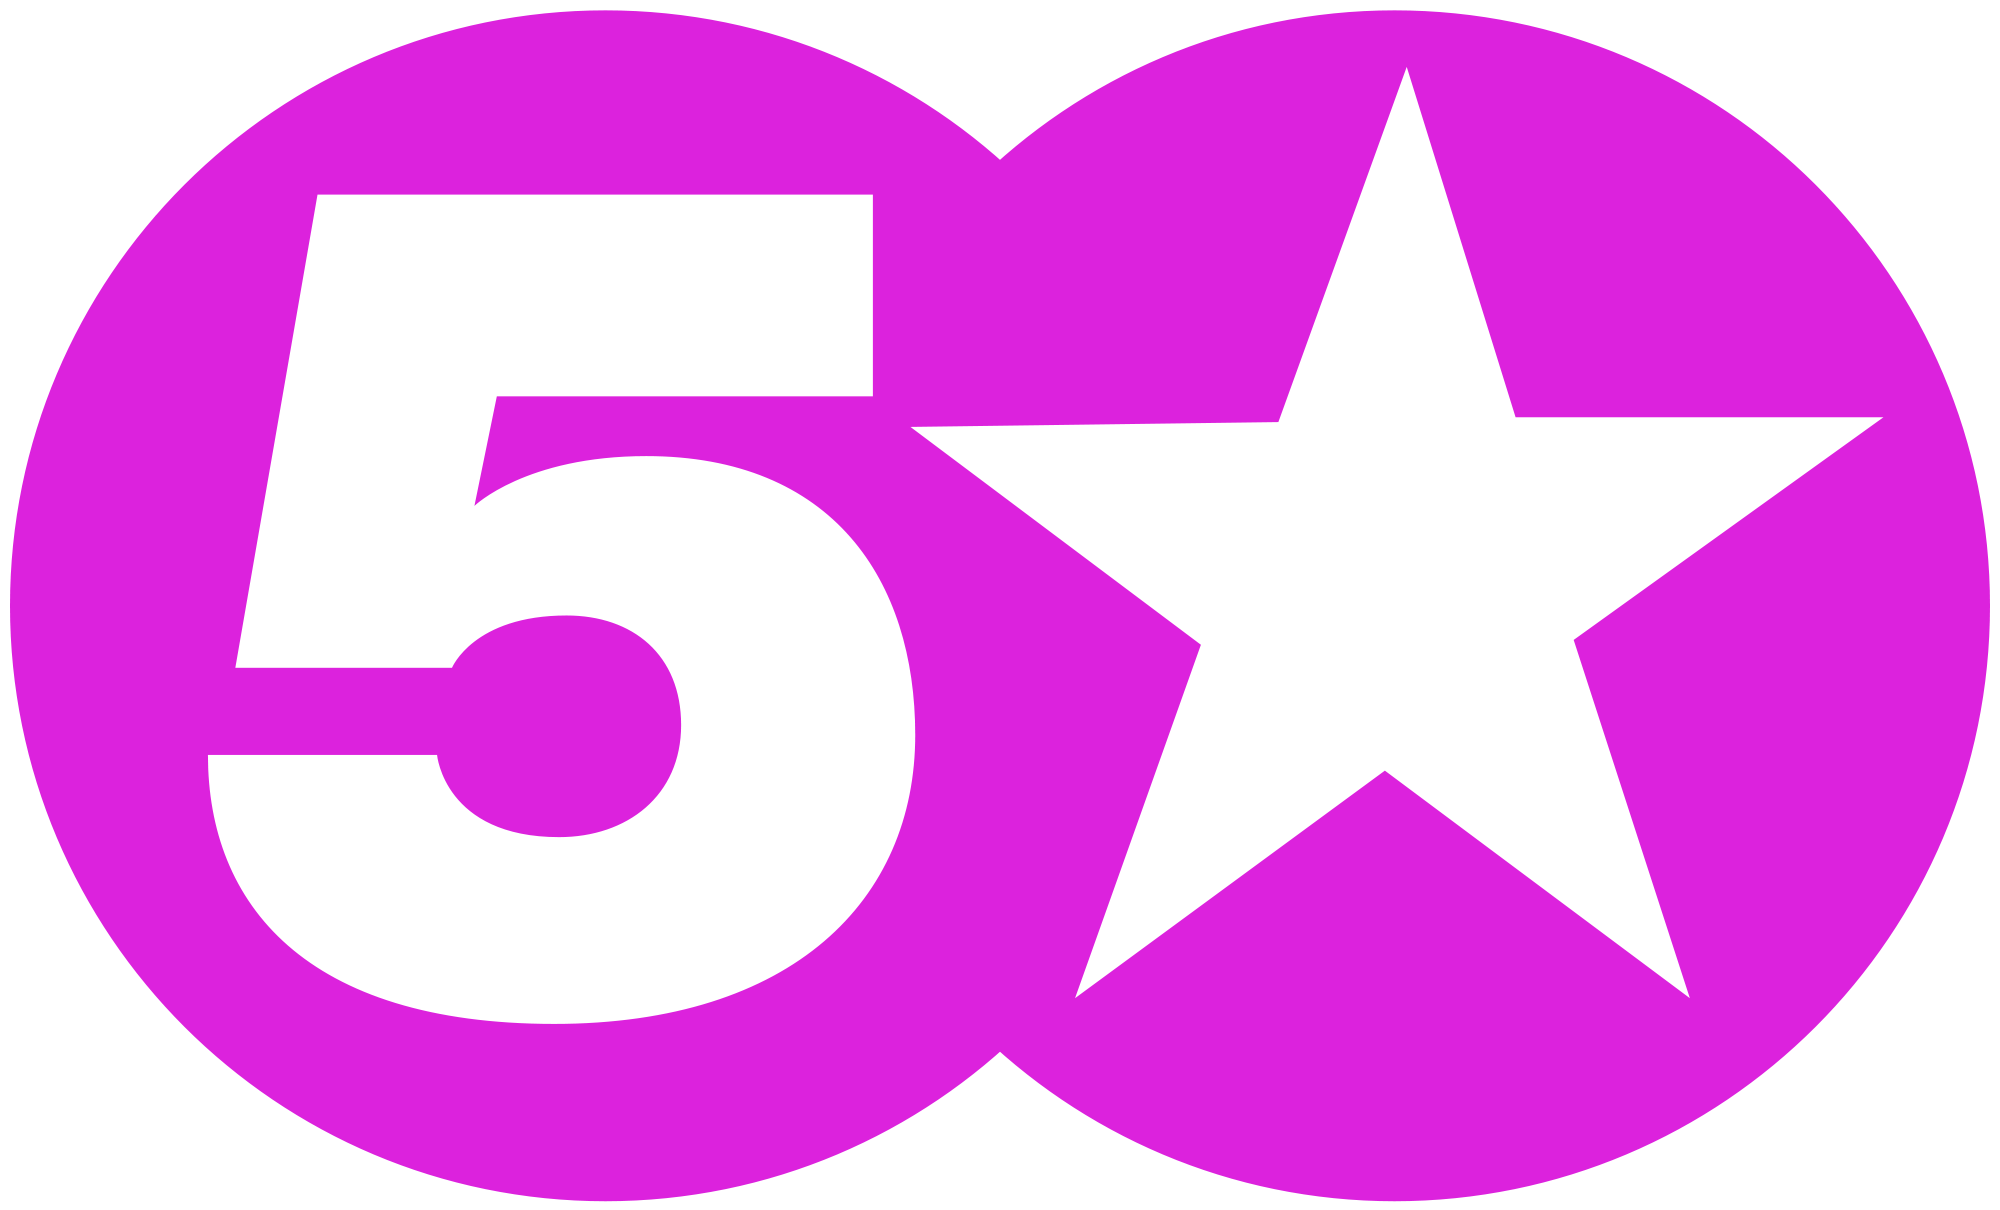 Get star 5. Логотип звезда. 5 Звезд логотип. 5 Звезд картинка. Значок канала Star TV.